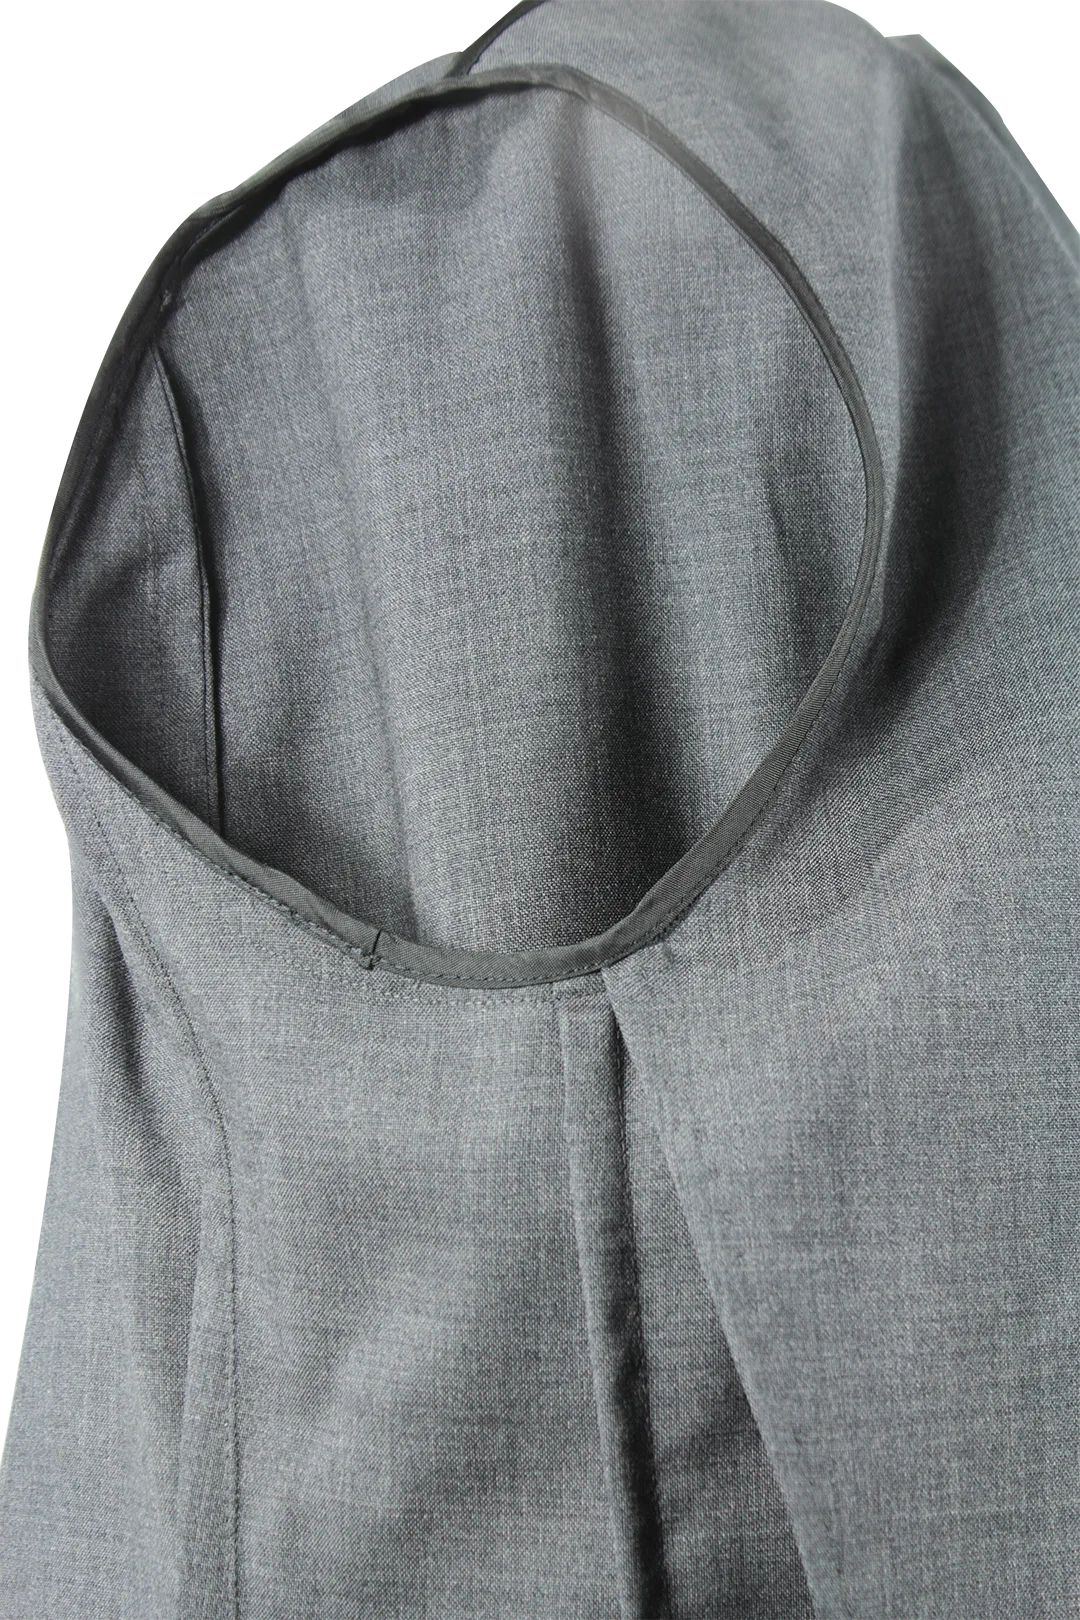 Giacca sfoderata in tela di lana grigio giromanica